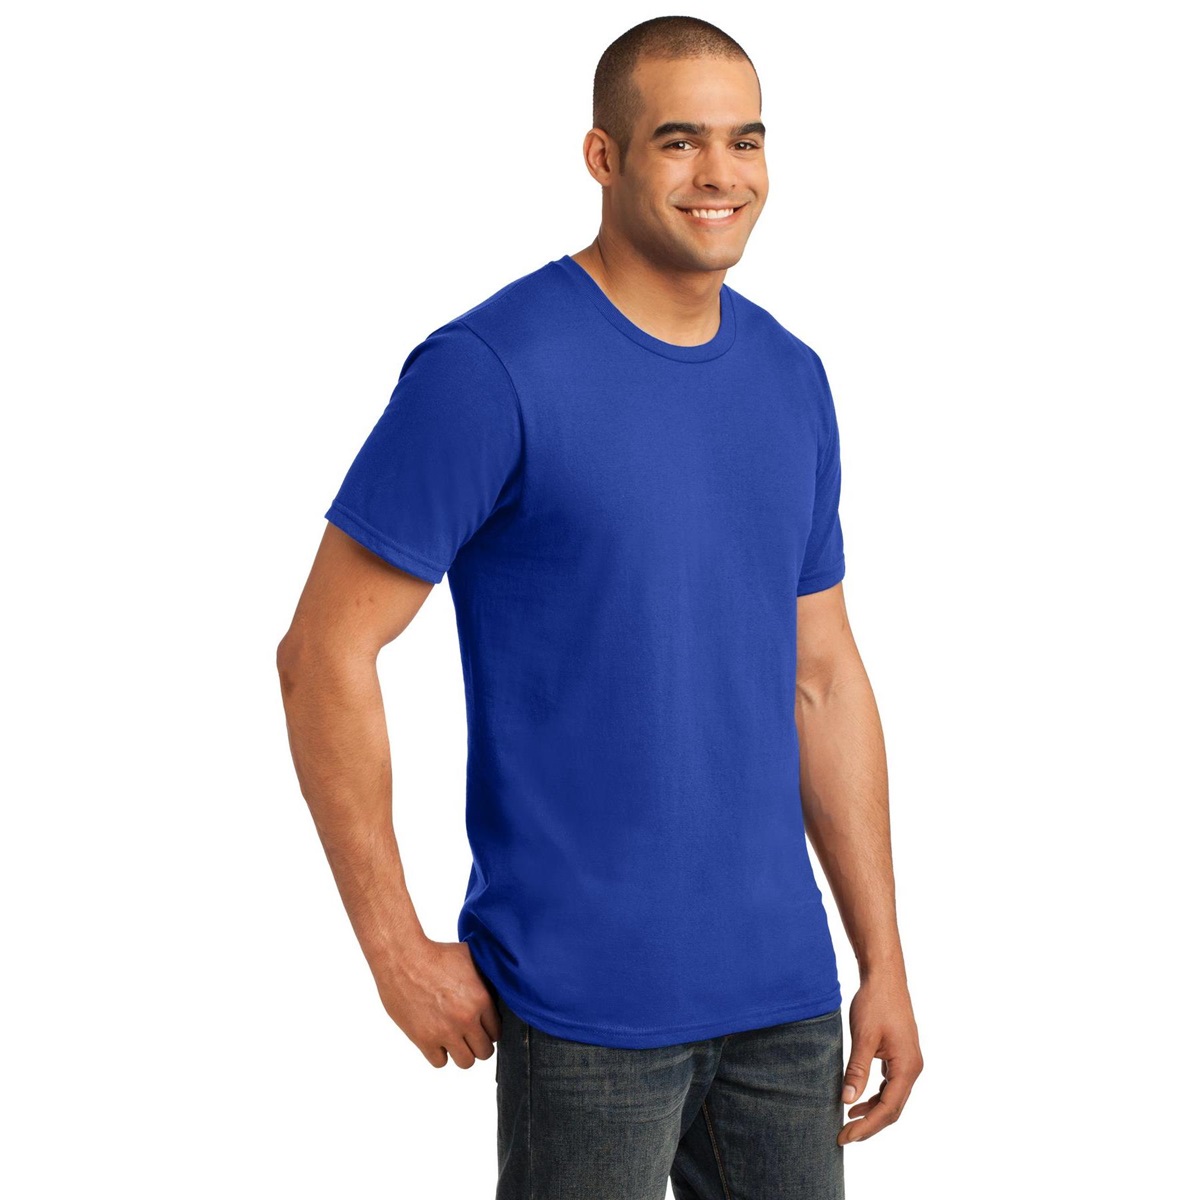 Anvil 980 100% Ring Spun Cotton T-Shirt - Royal Blue | FullSource.com